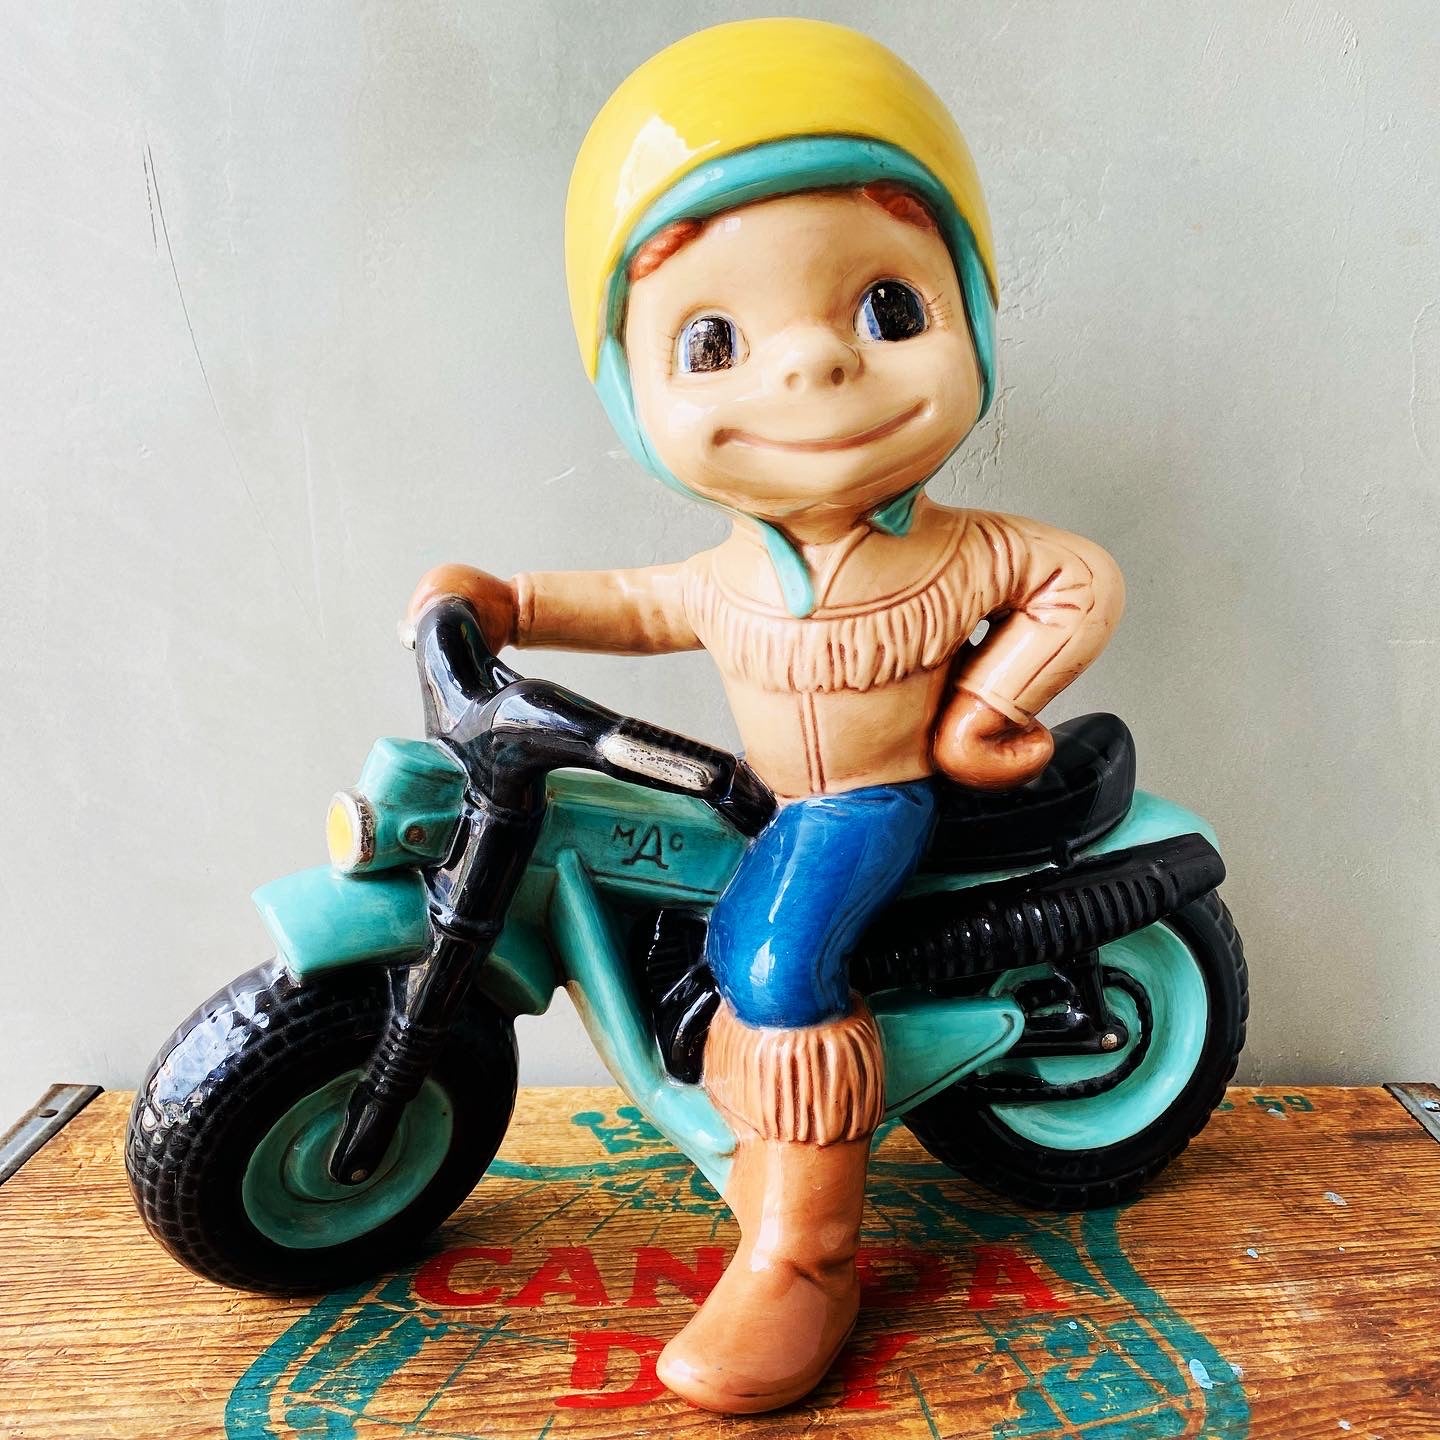 【1982 USA vintage】Atlantic mold ceramic boy ビンテージドール バイク